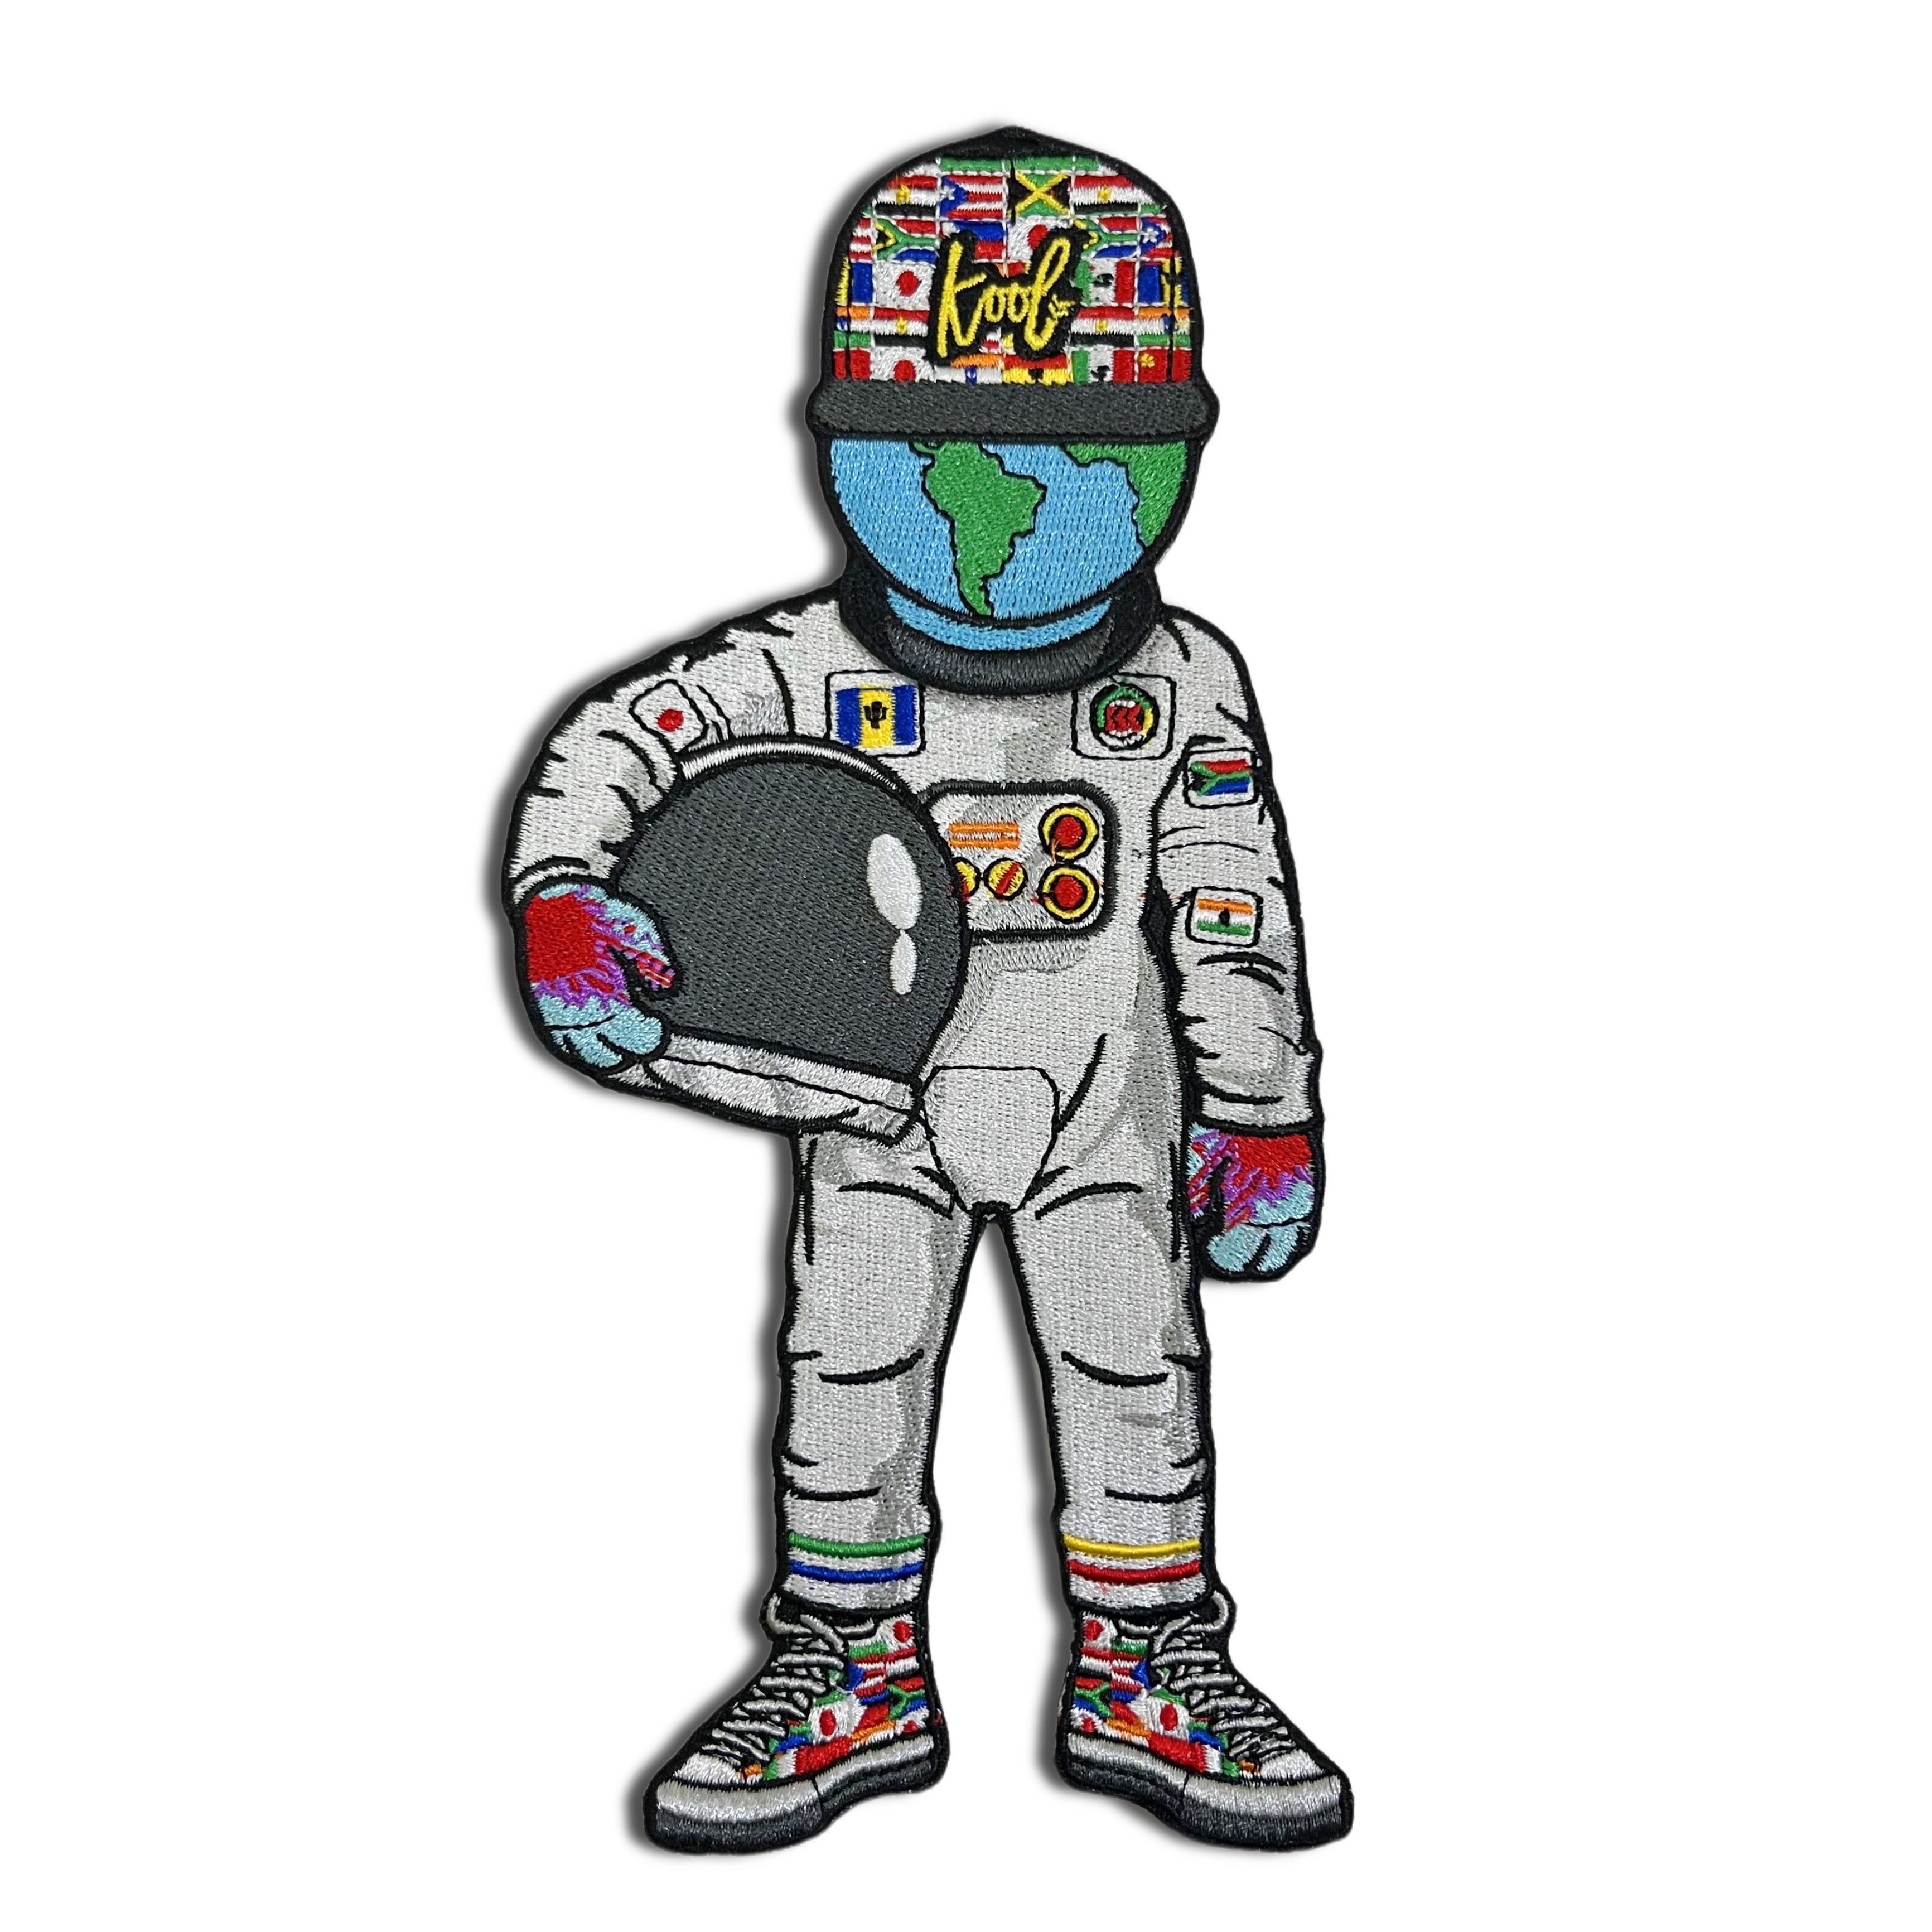 Kool World Astronaut 8 x5 iron-on patch